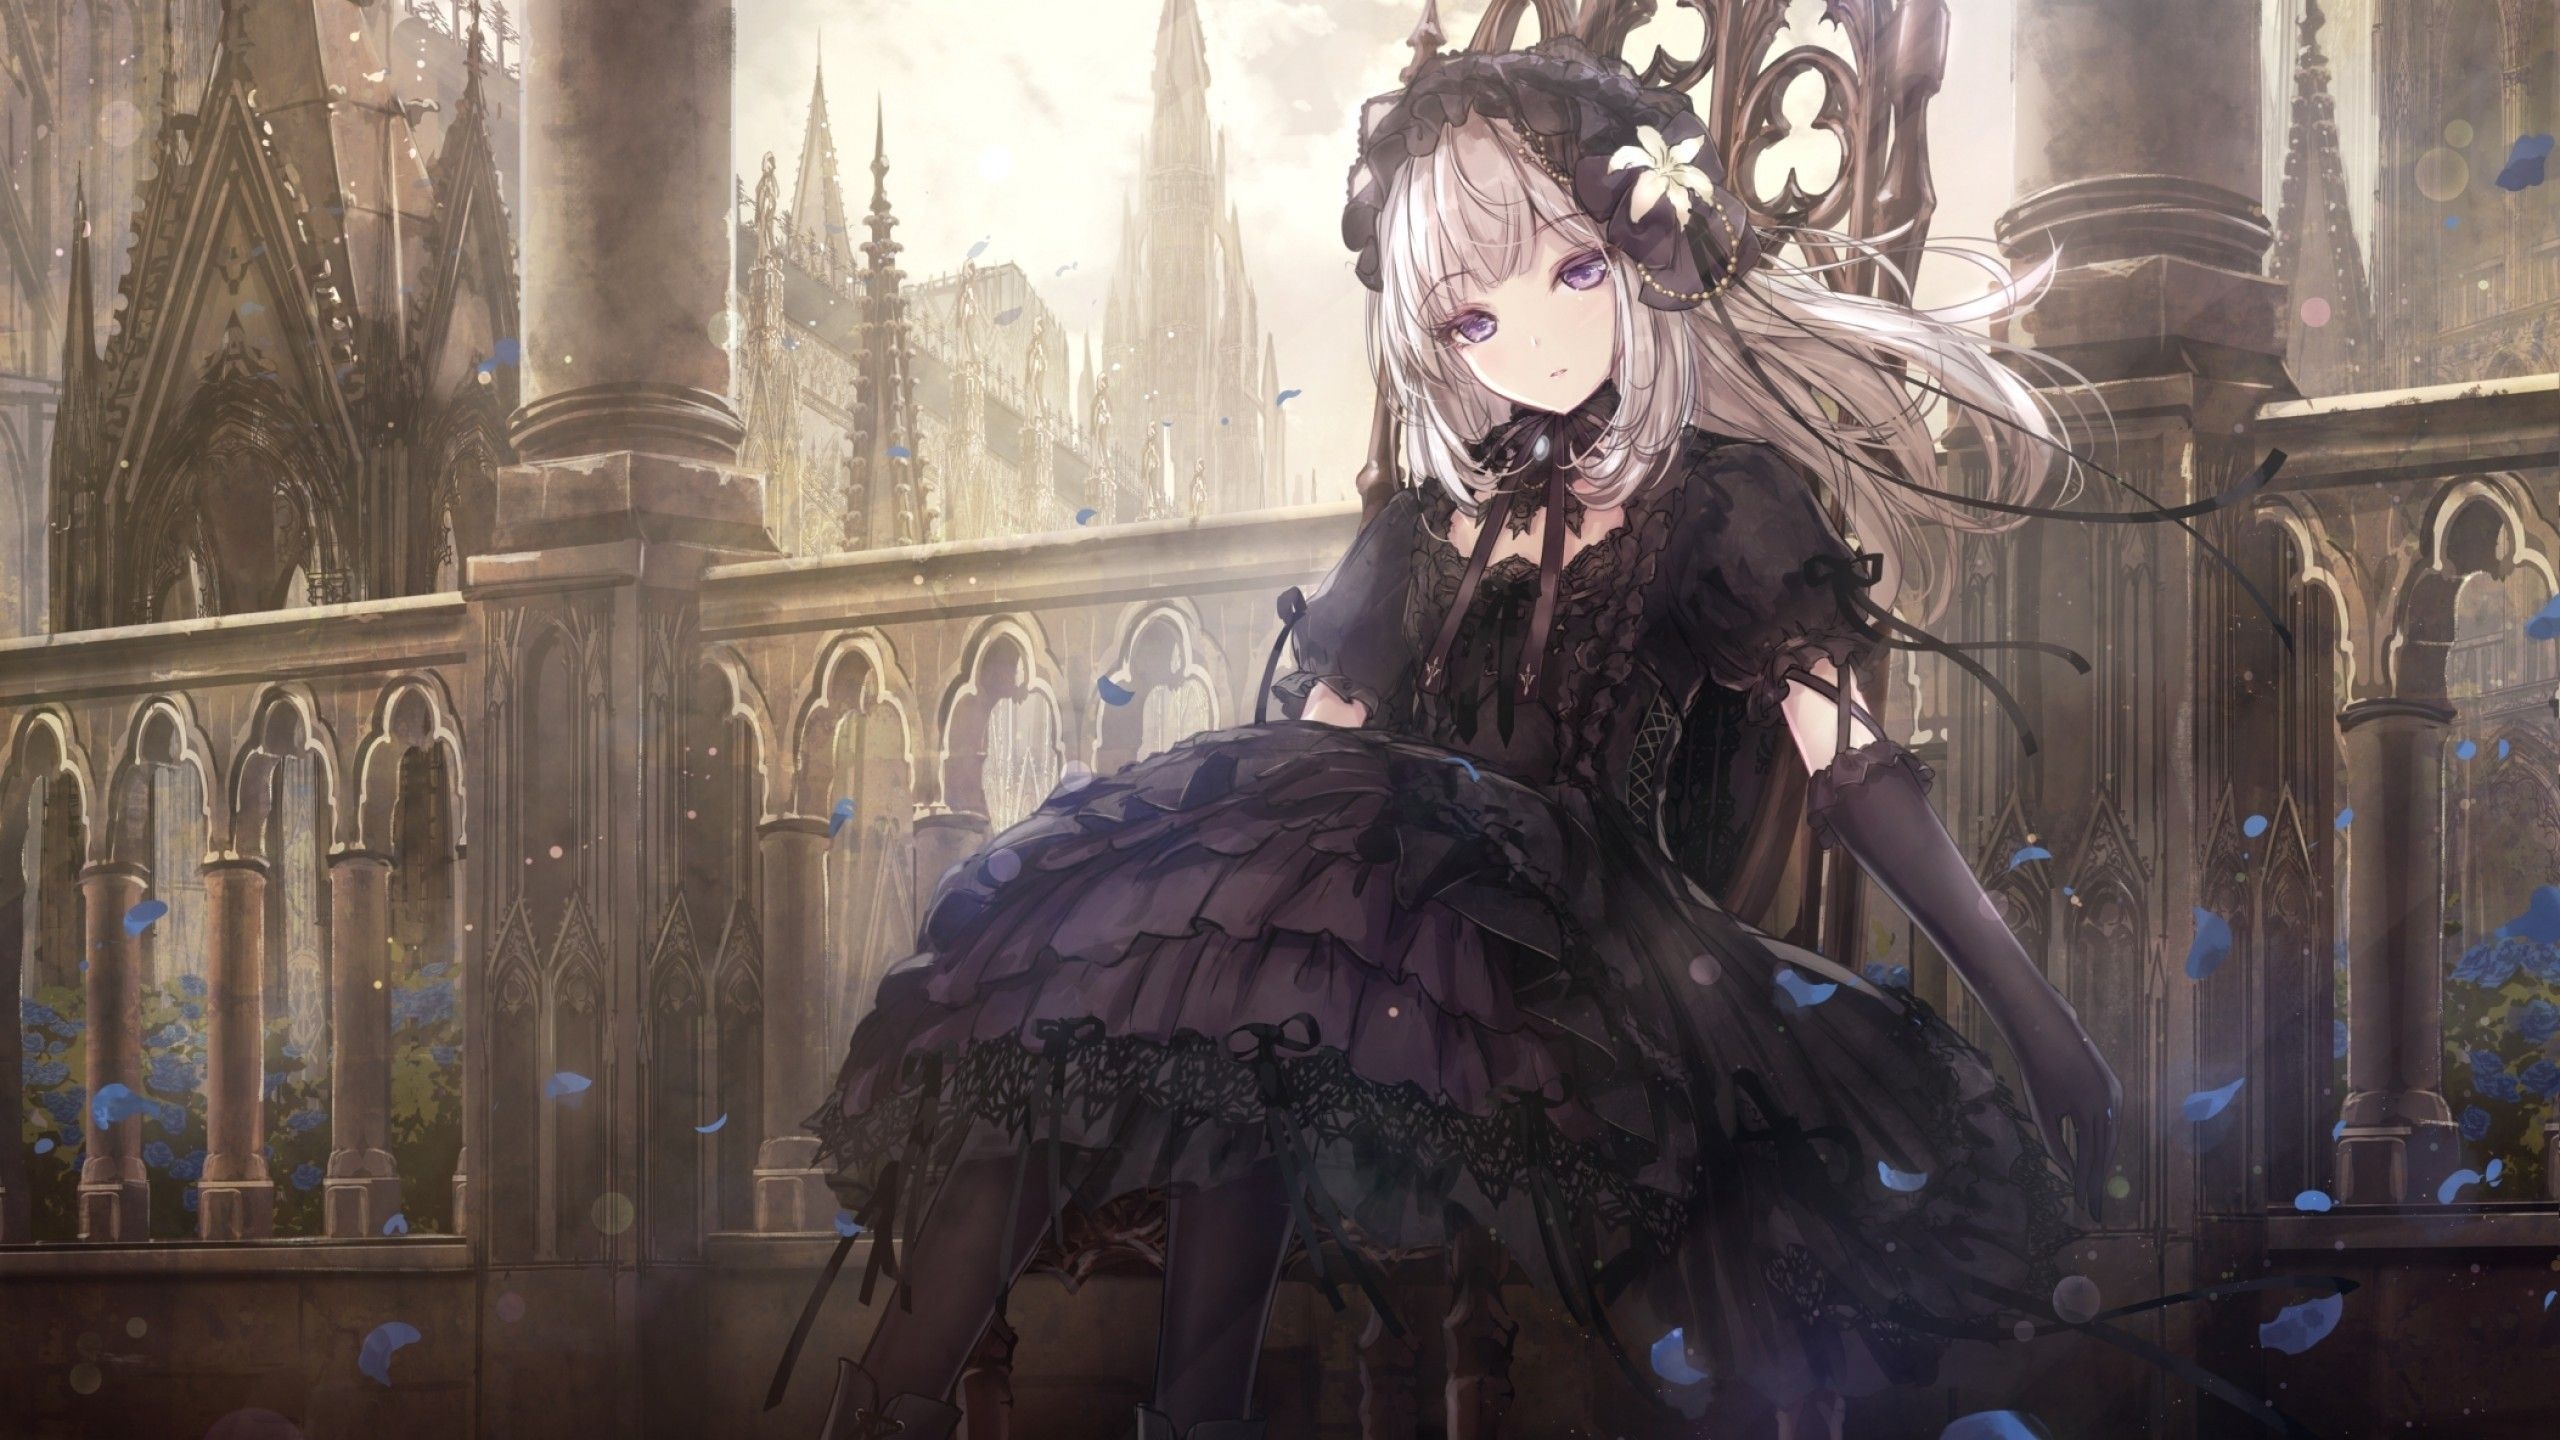 Goth: Dark anime, Gothic Lolita, Ghastly fashion and style, Temple. 2560x1440 HD Wallpaper.